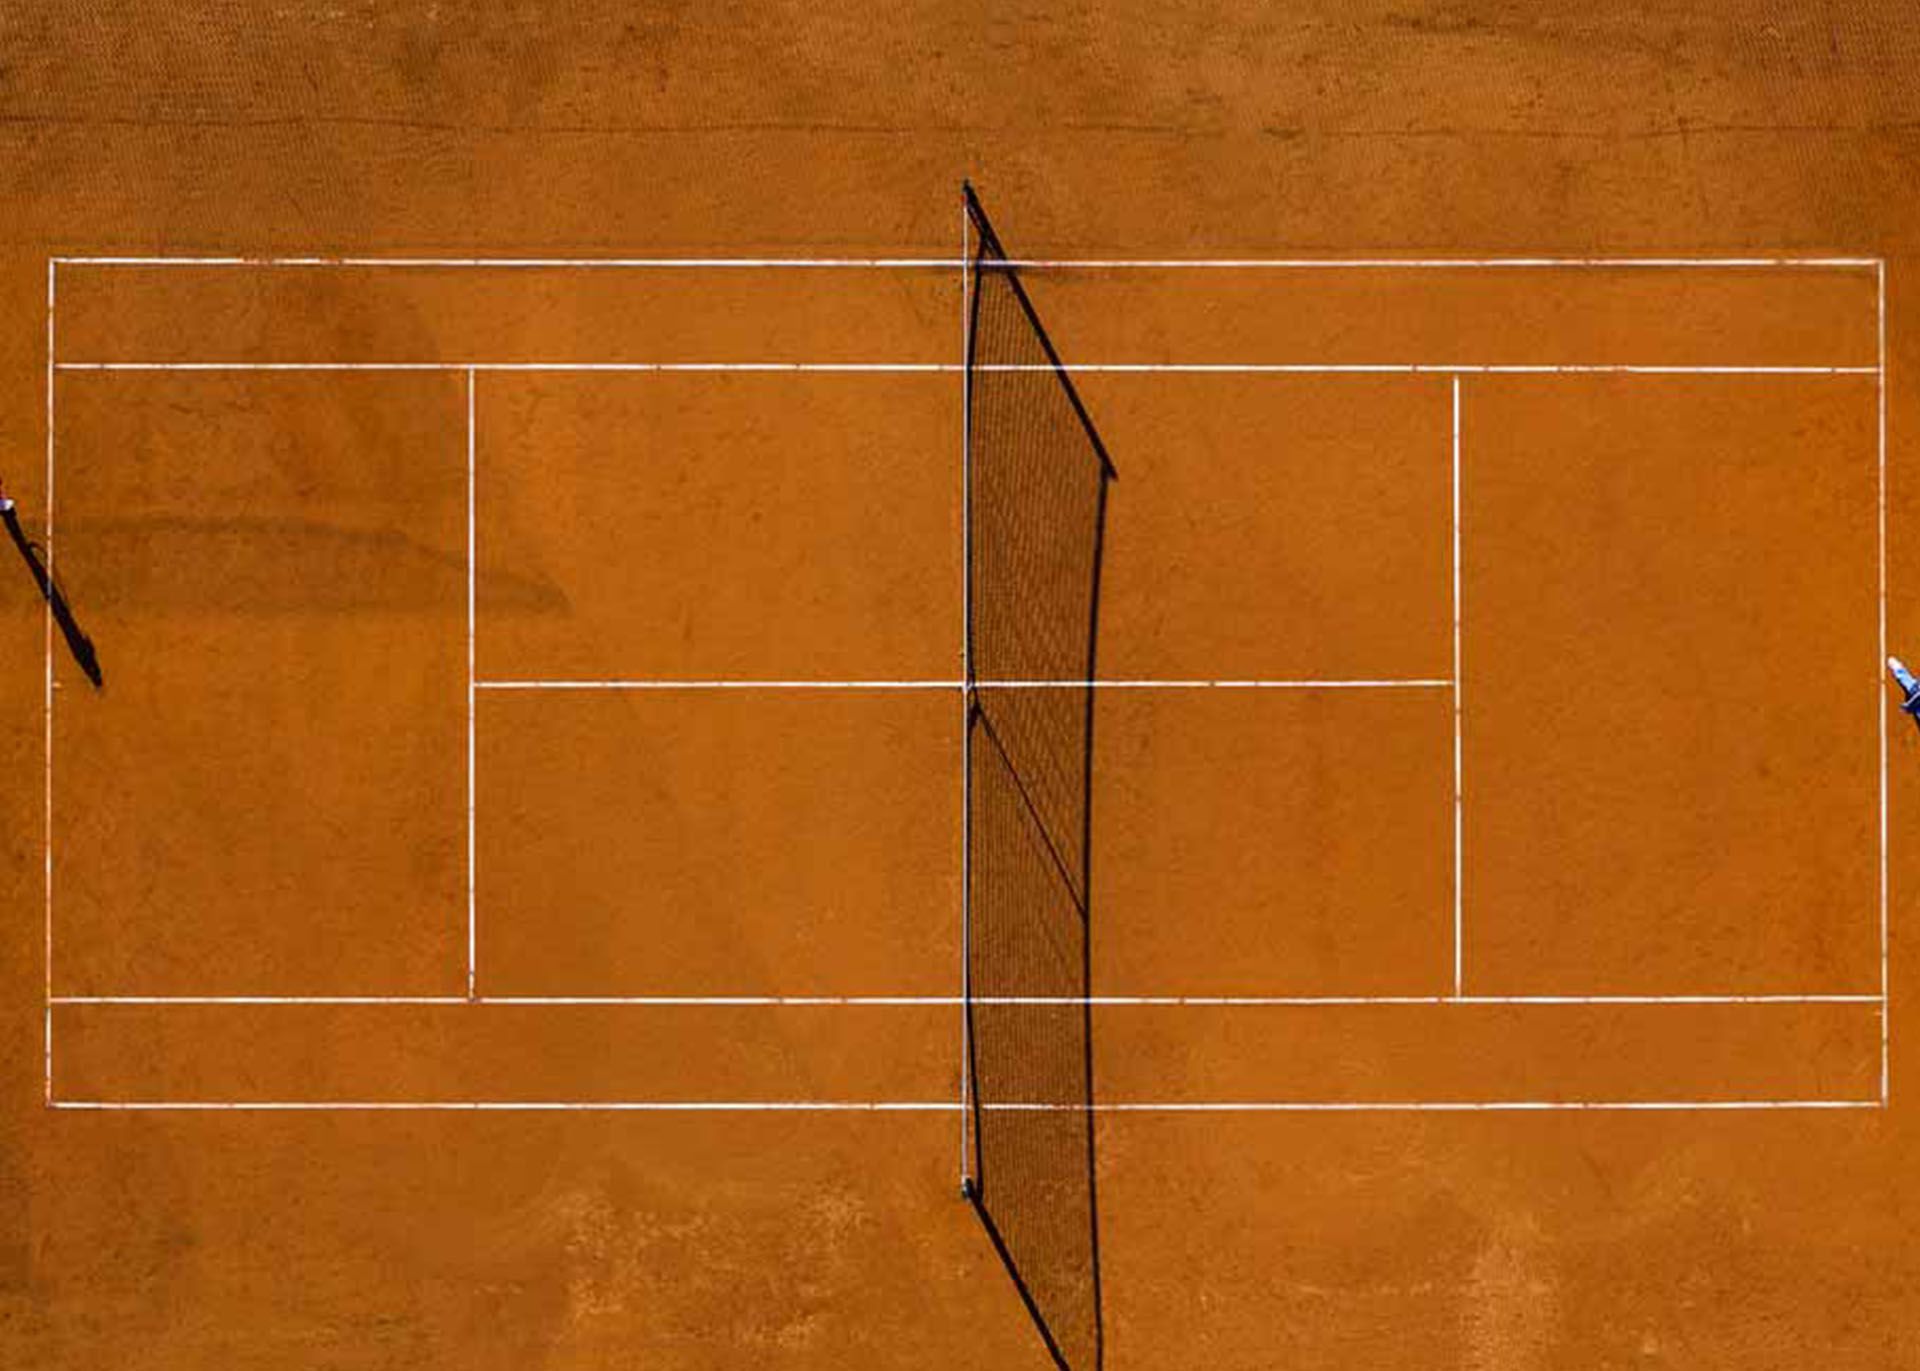 Clay Court Tennis (Har Tru)